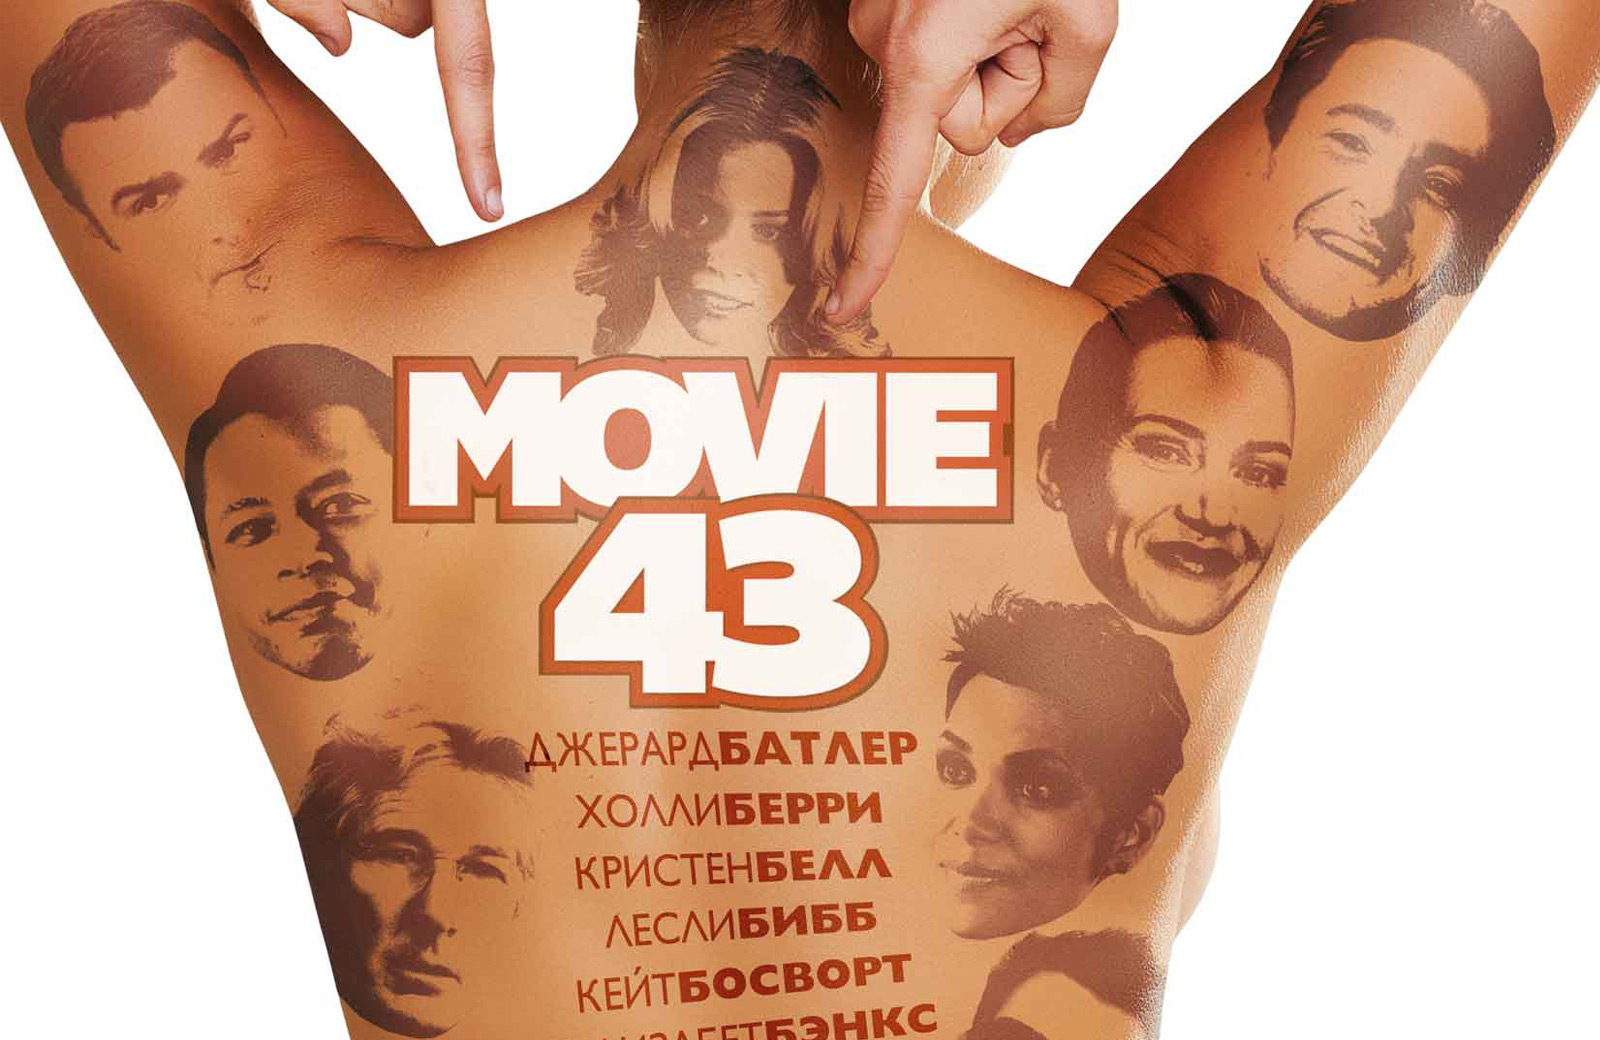 Movie 43: Торжество черного юмора